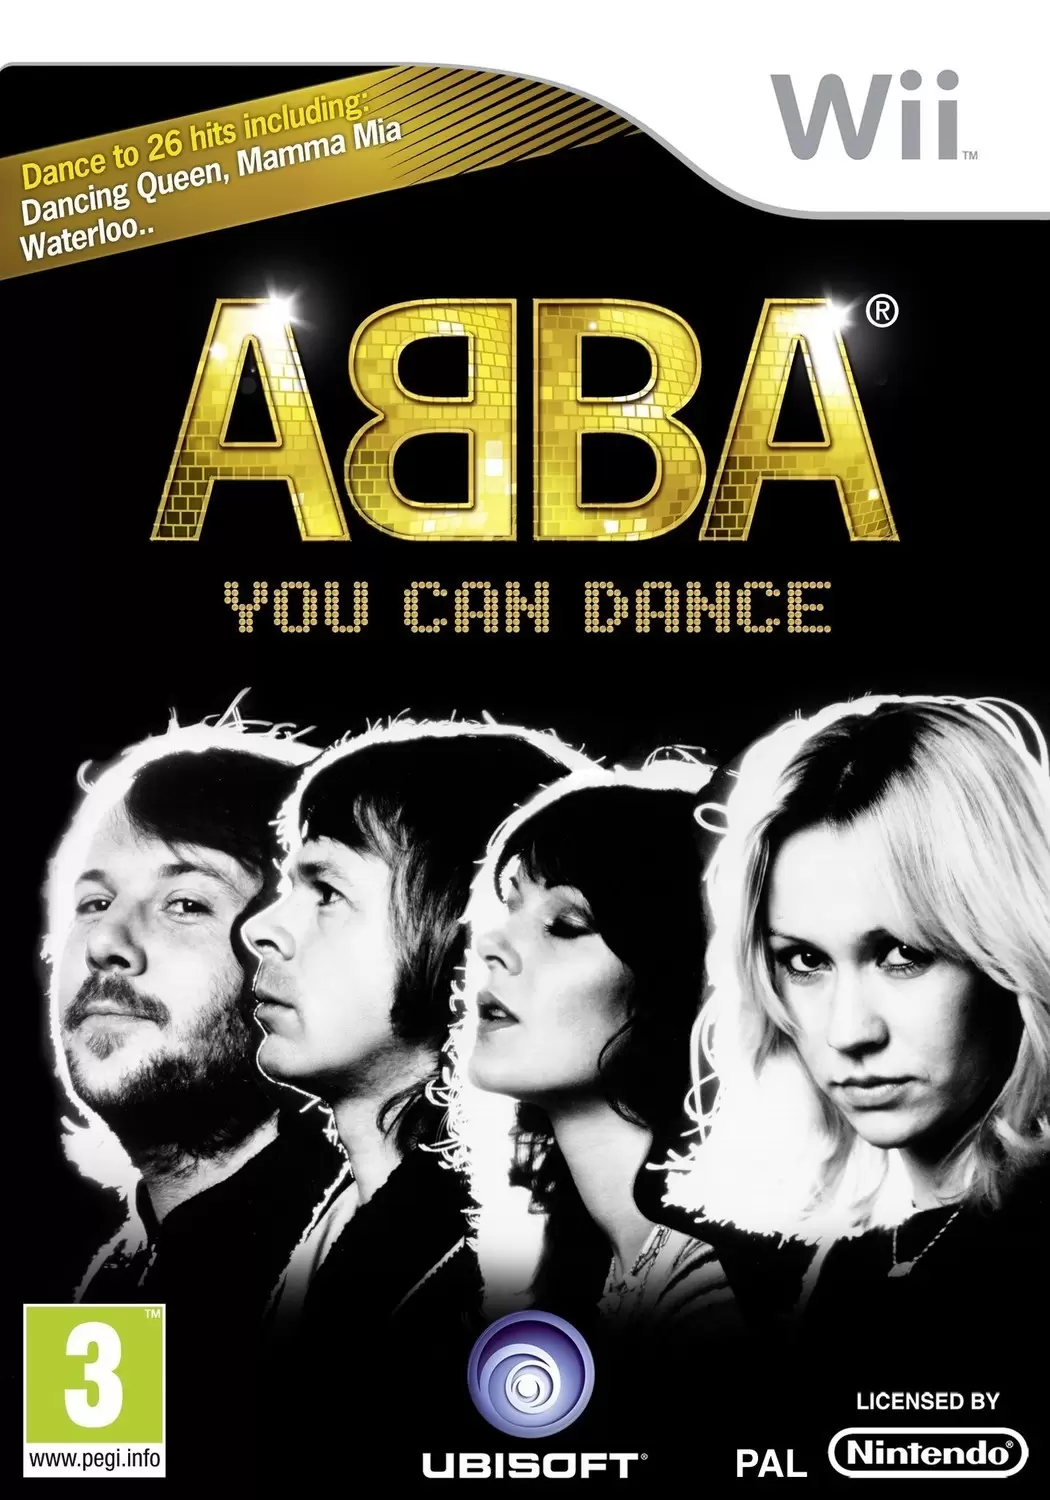 Nintendo Wii Games - ABBA: You Can Dance